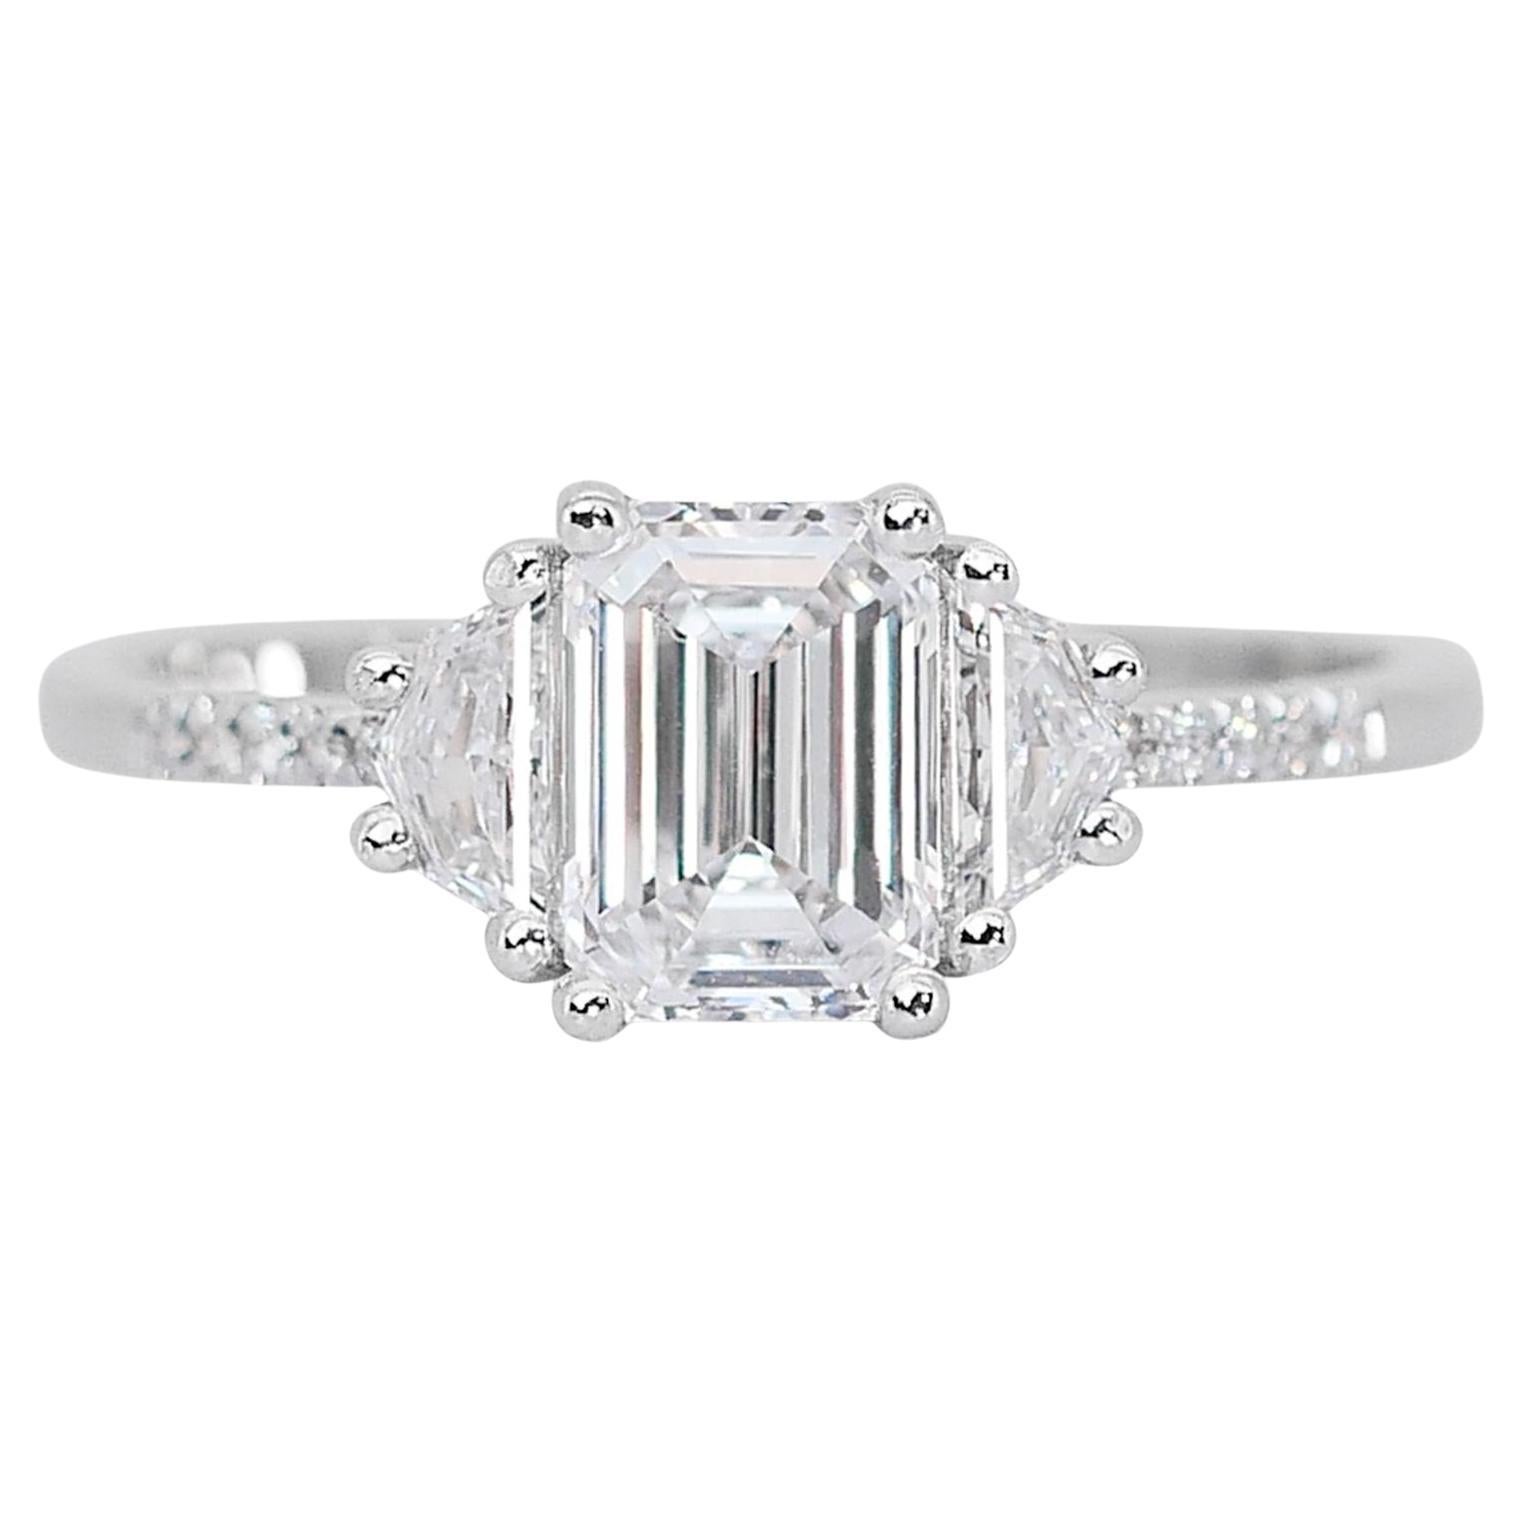 Luxurious 1.20ct Diamond 3-Stone Ring in 18k White Gold - GIA Certified 